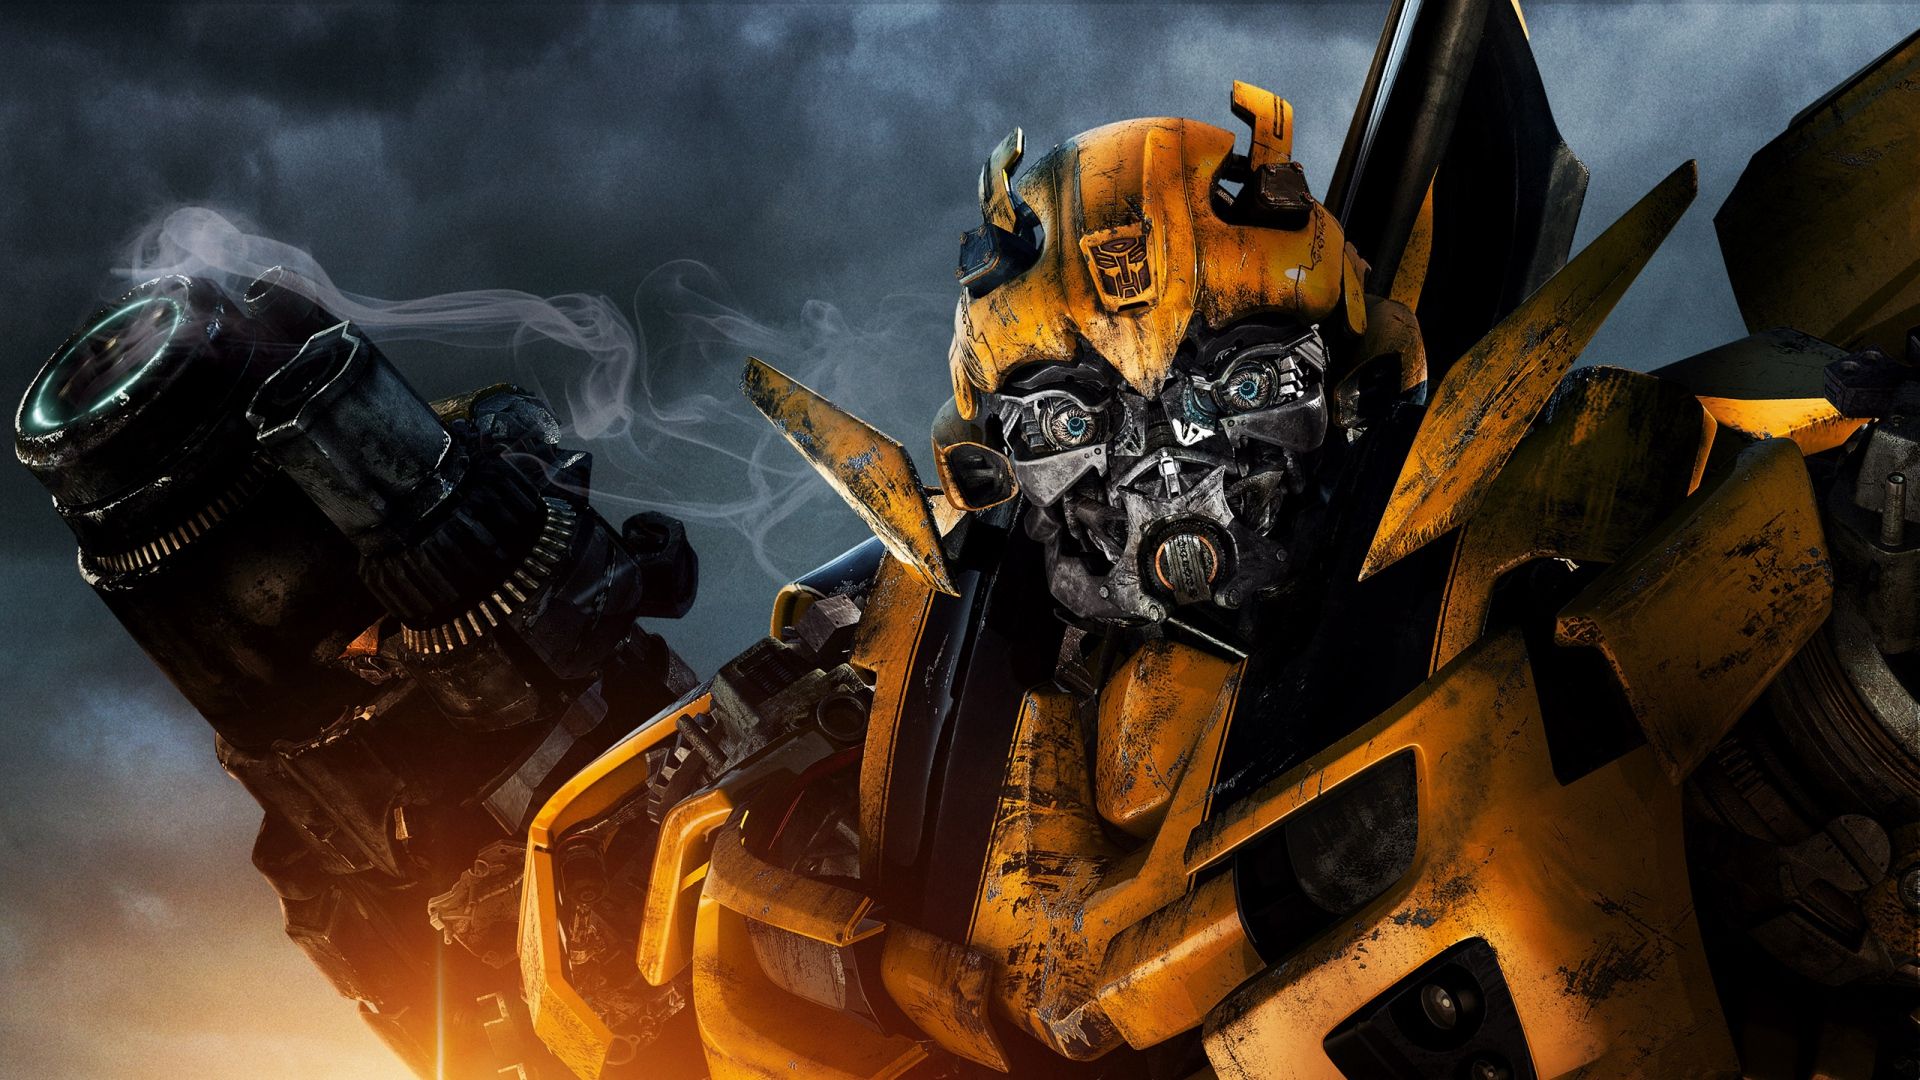  Transformers Hintergrundbild 1920x1080. HD Transformer Wallpaper Background For Free Download